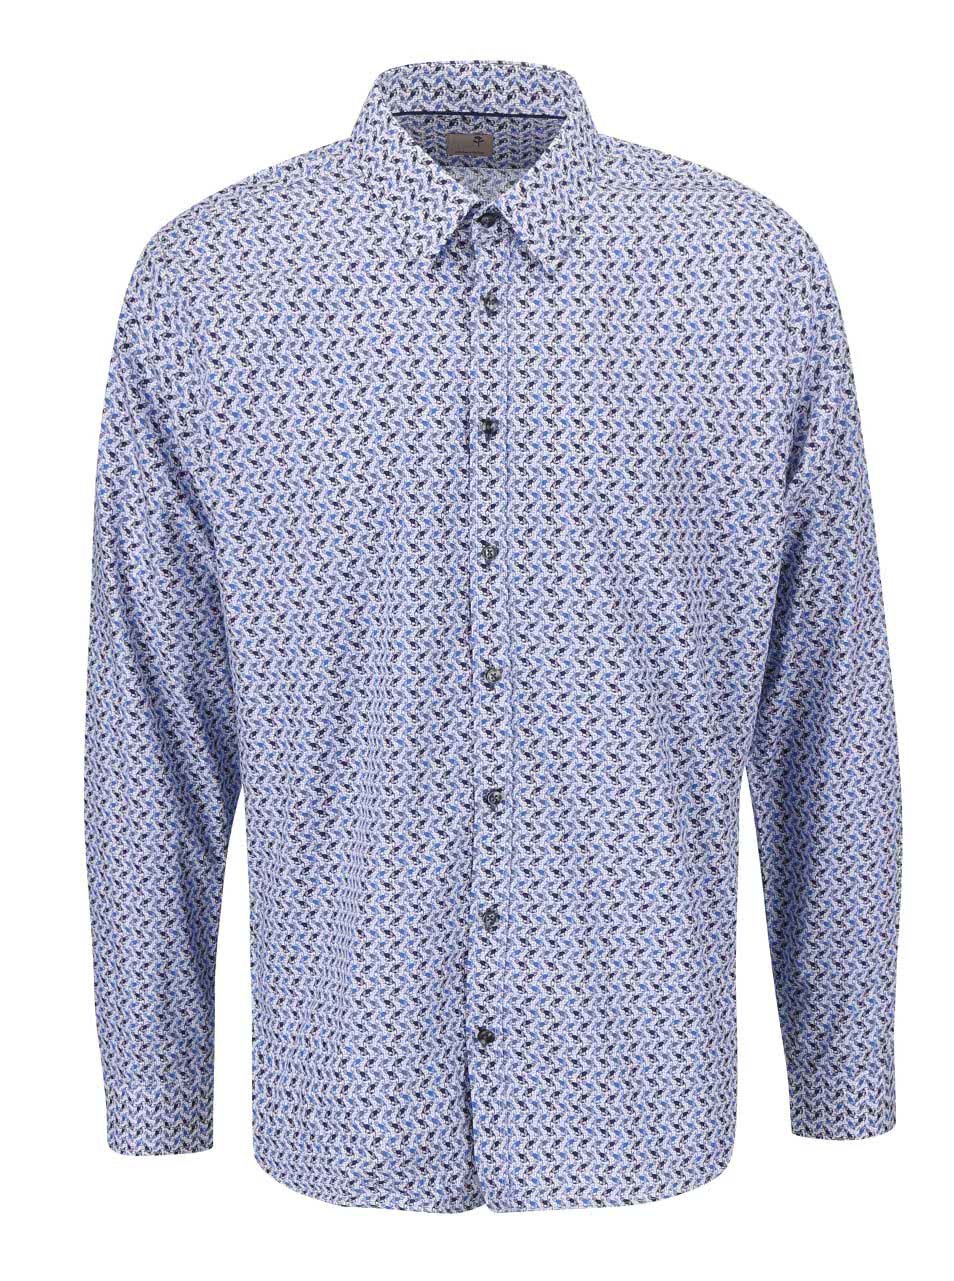 Modrá košile s potiskem chameleonů Seidensticker Modern Kent Slim Fit